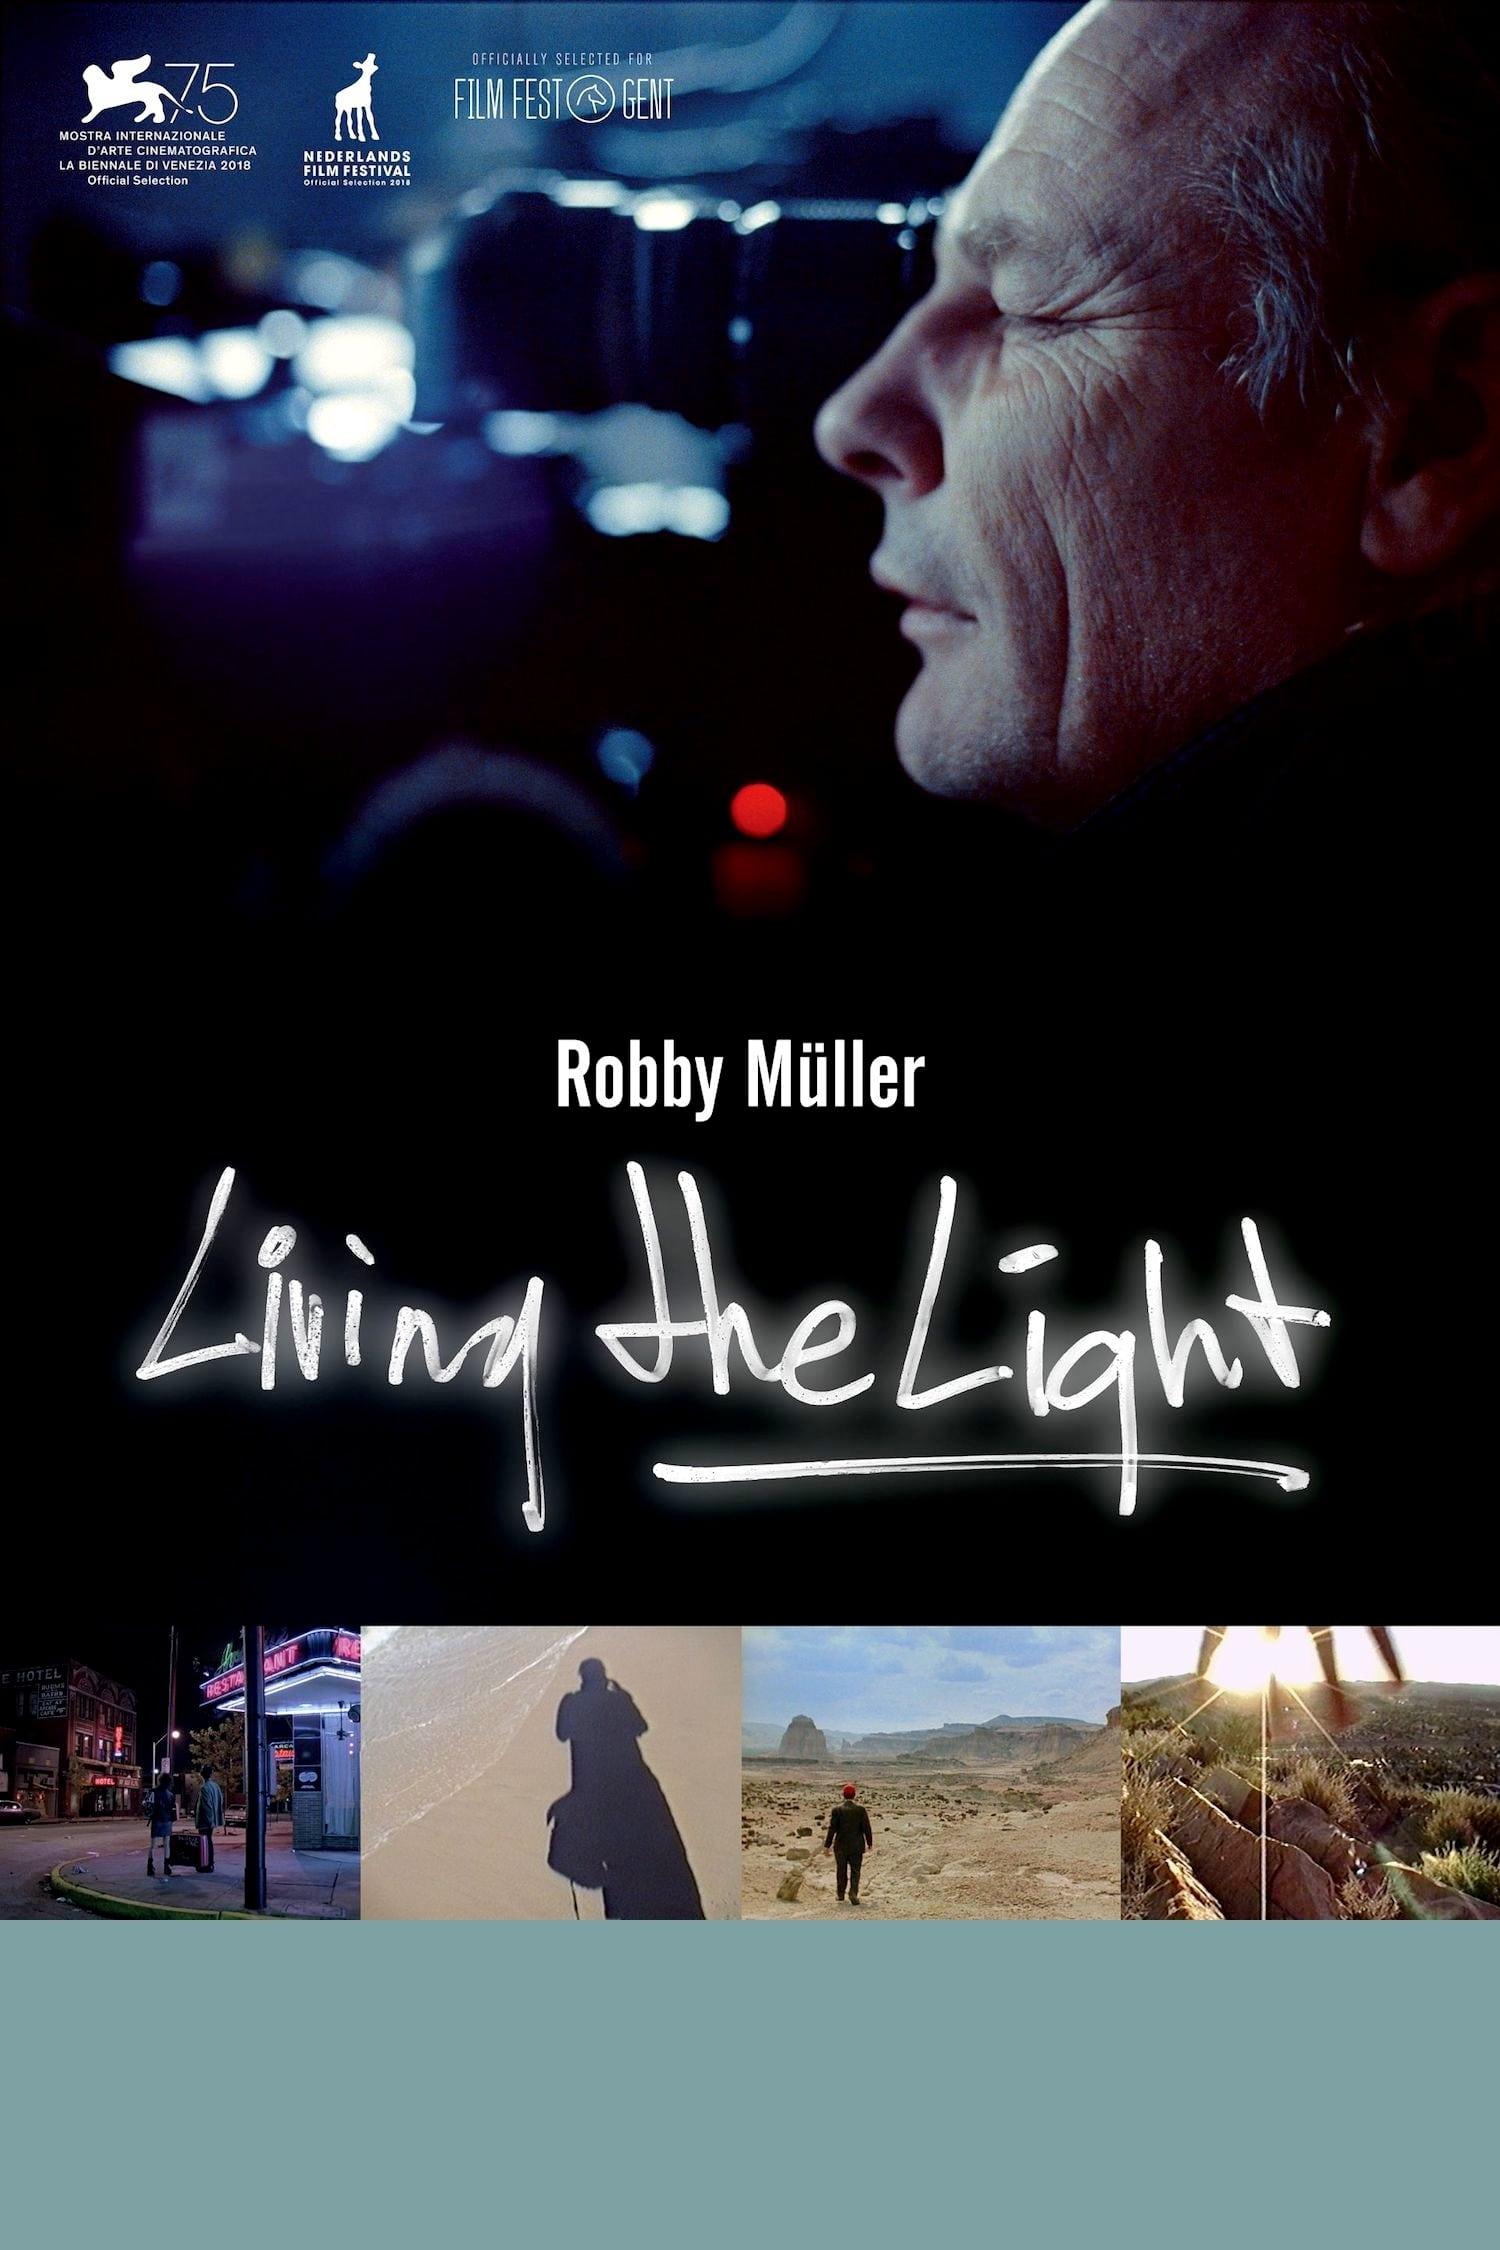 Living the Light: Robby Müller poster